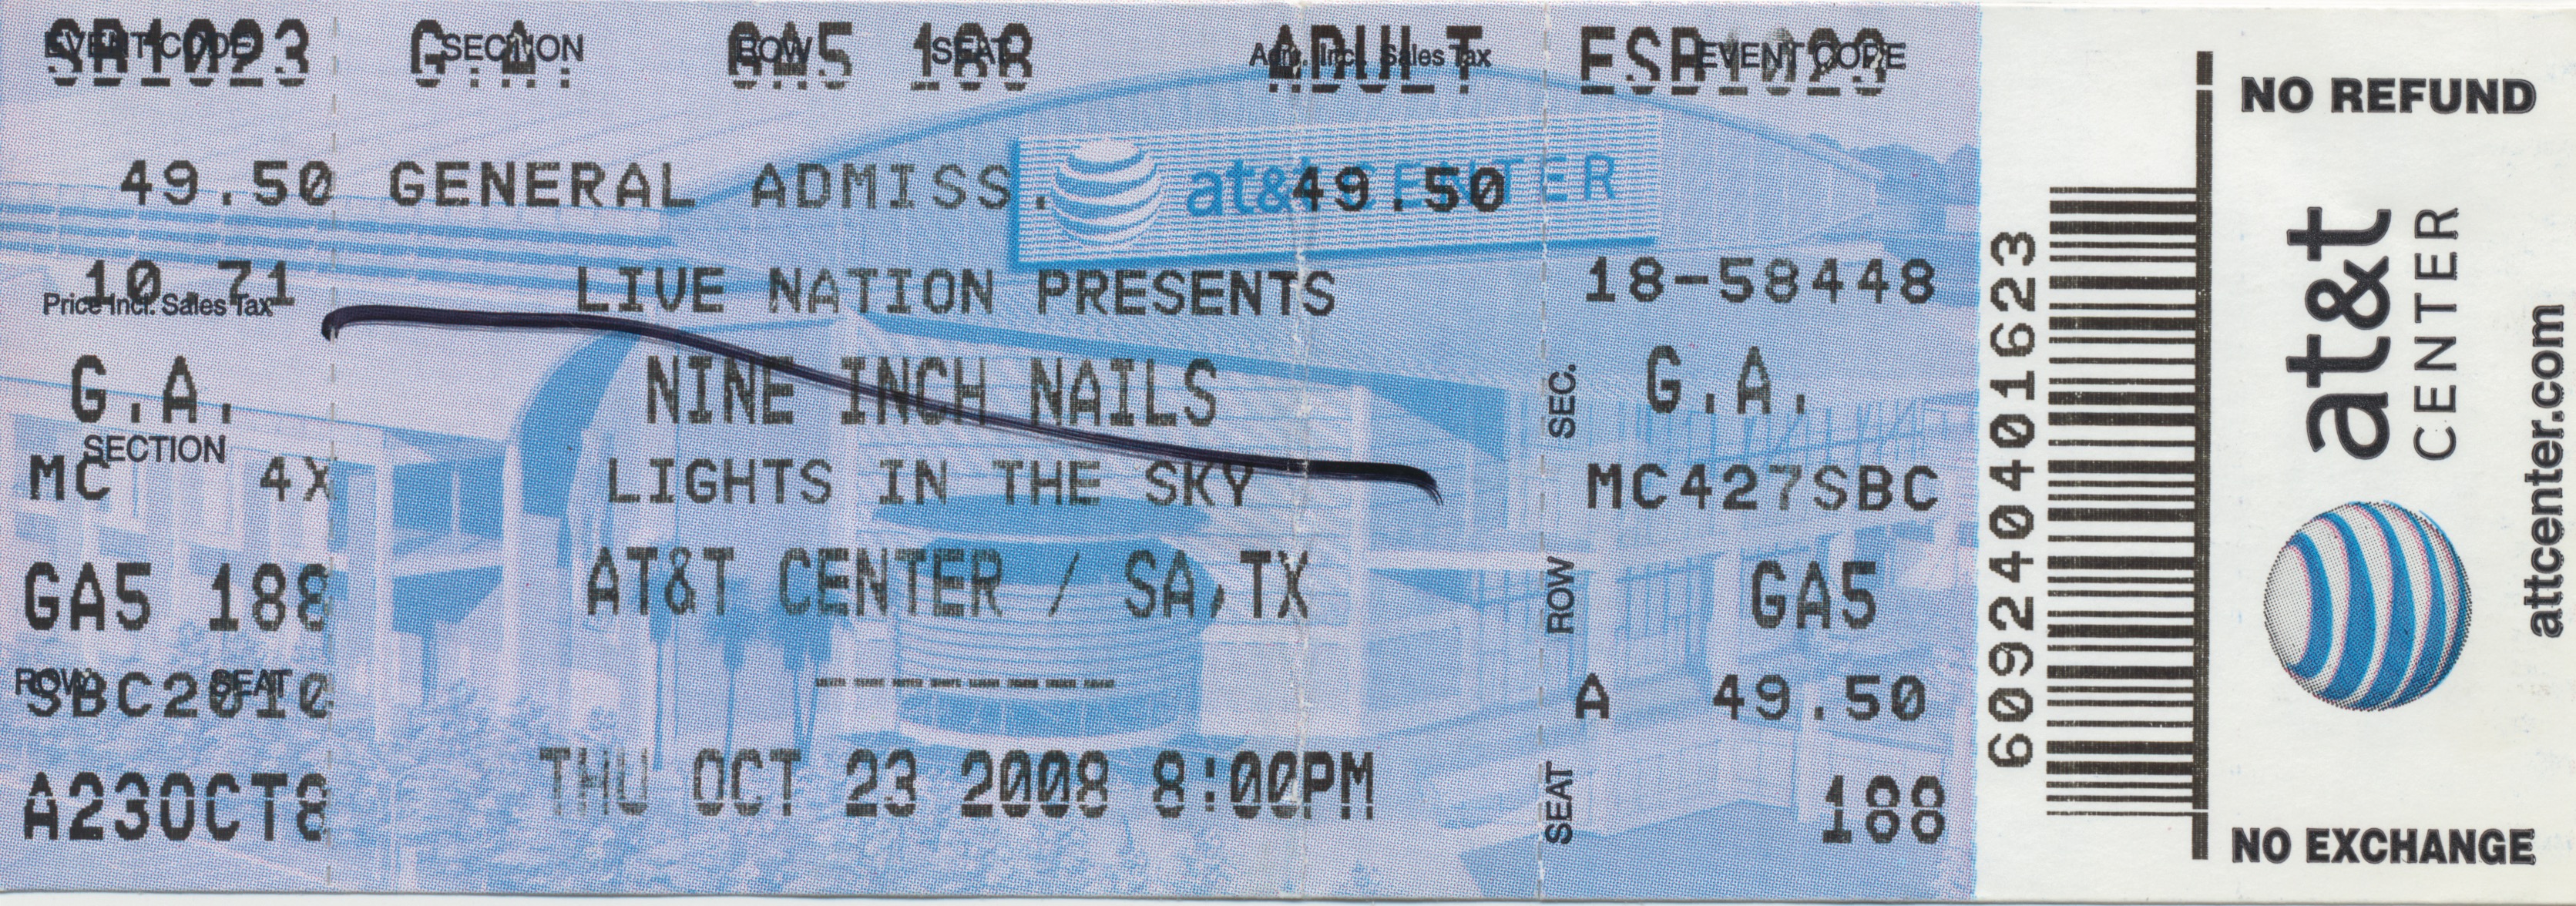 2008/10/23 Ticket